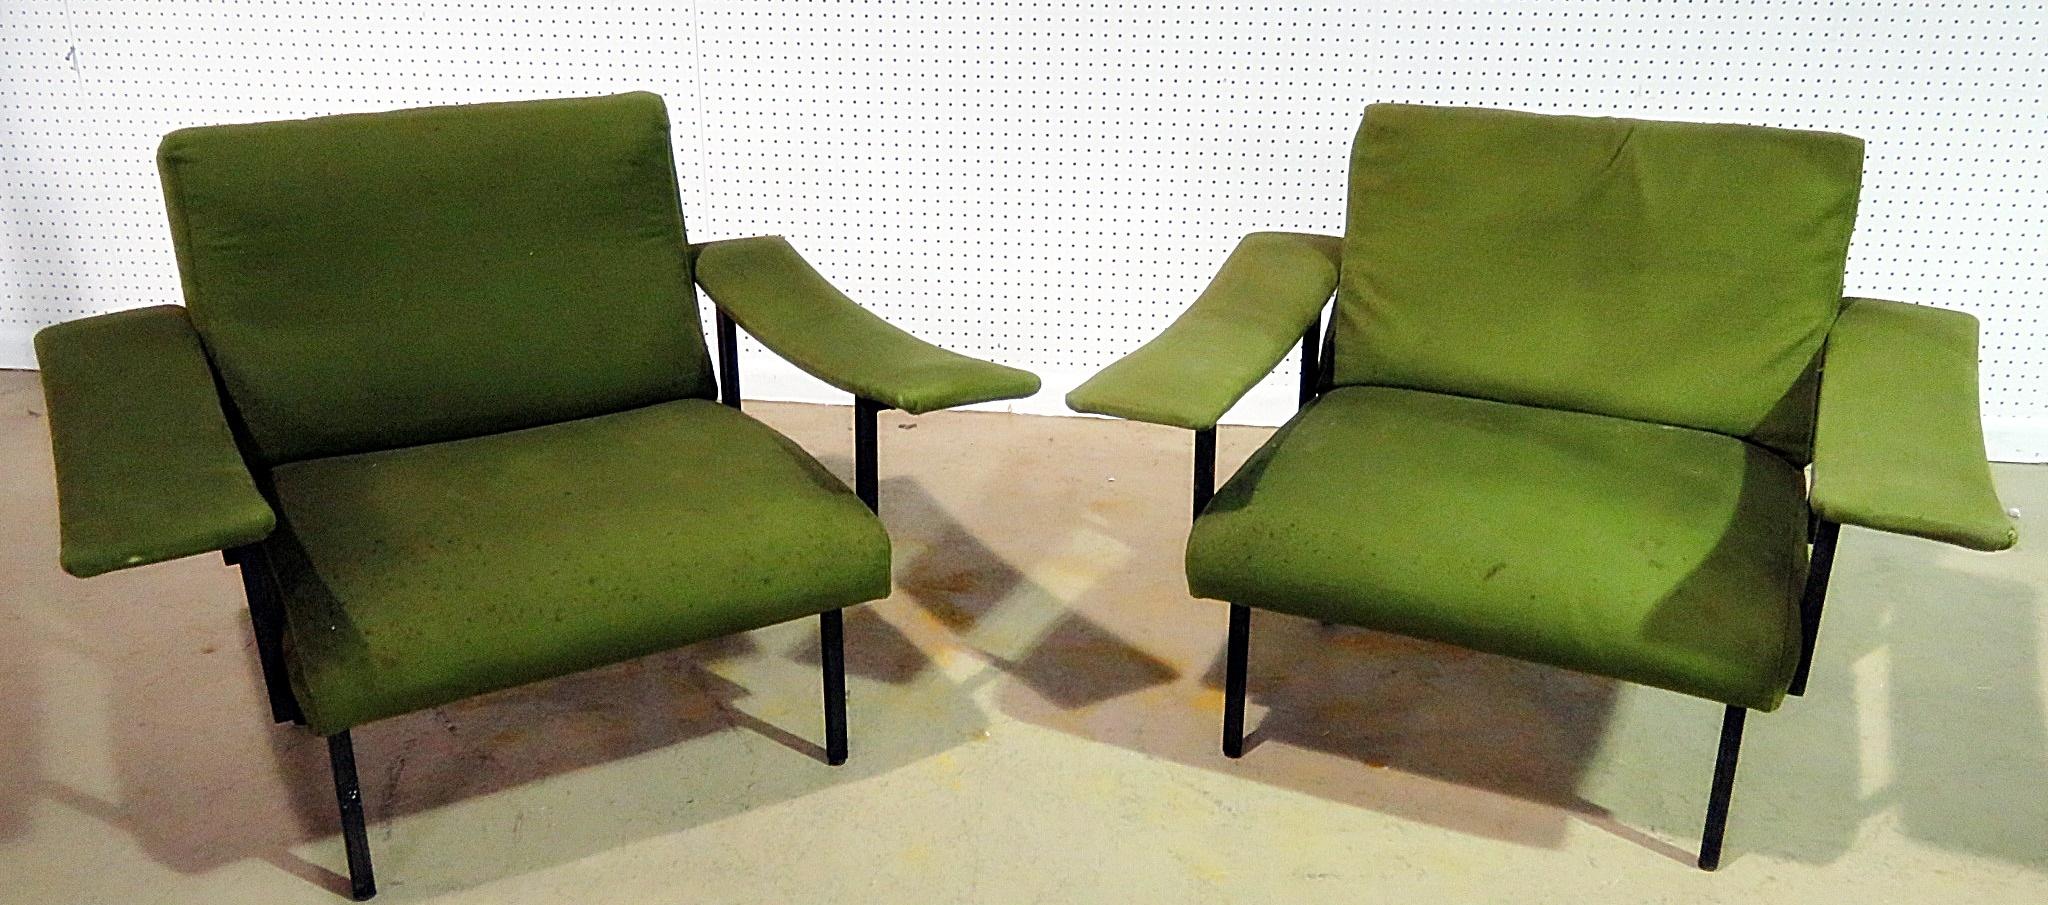 Pair of vintage Mid-Century Modern Italian lounge chairs.